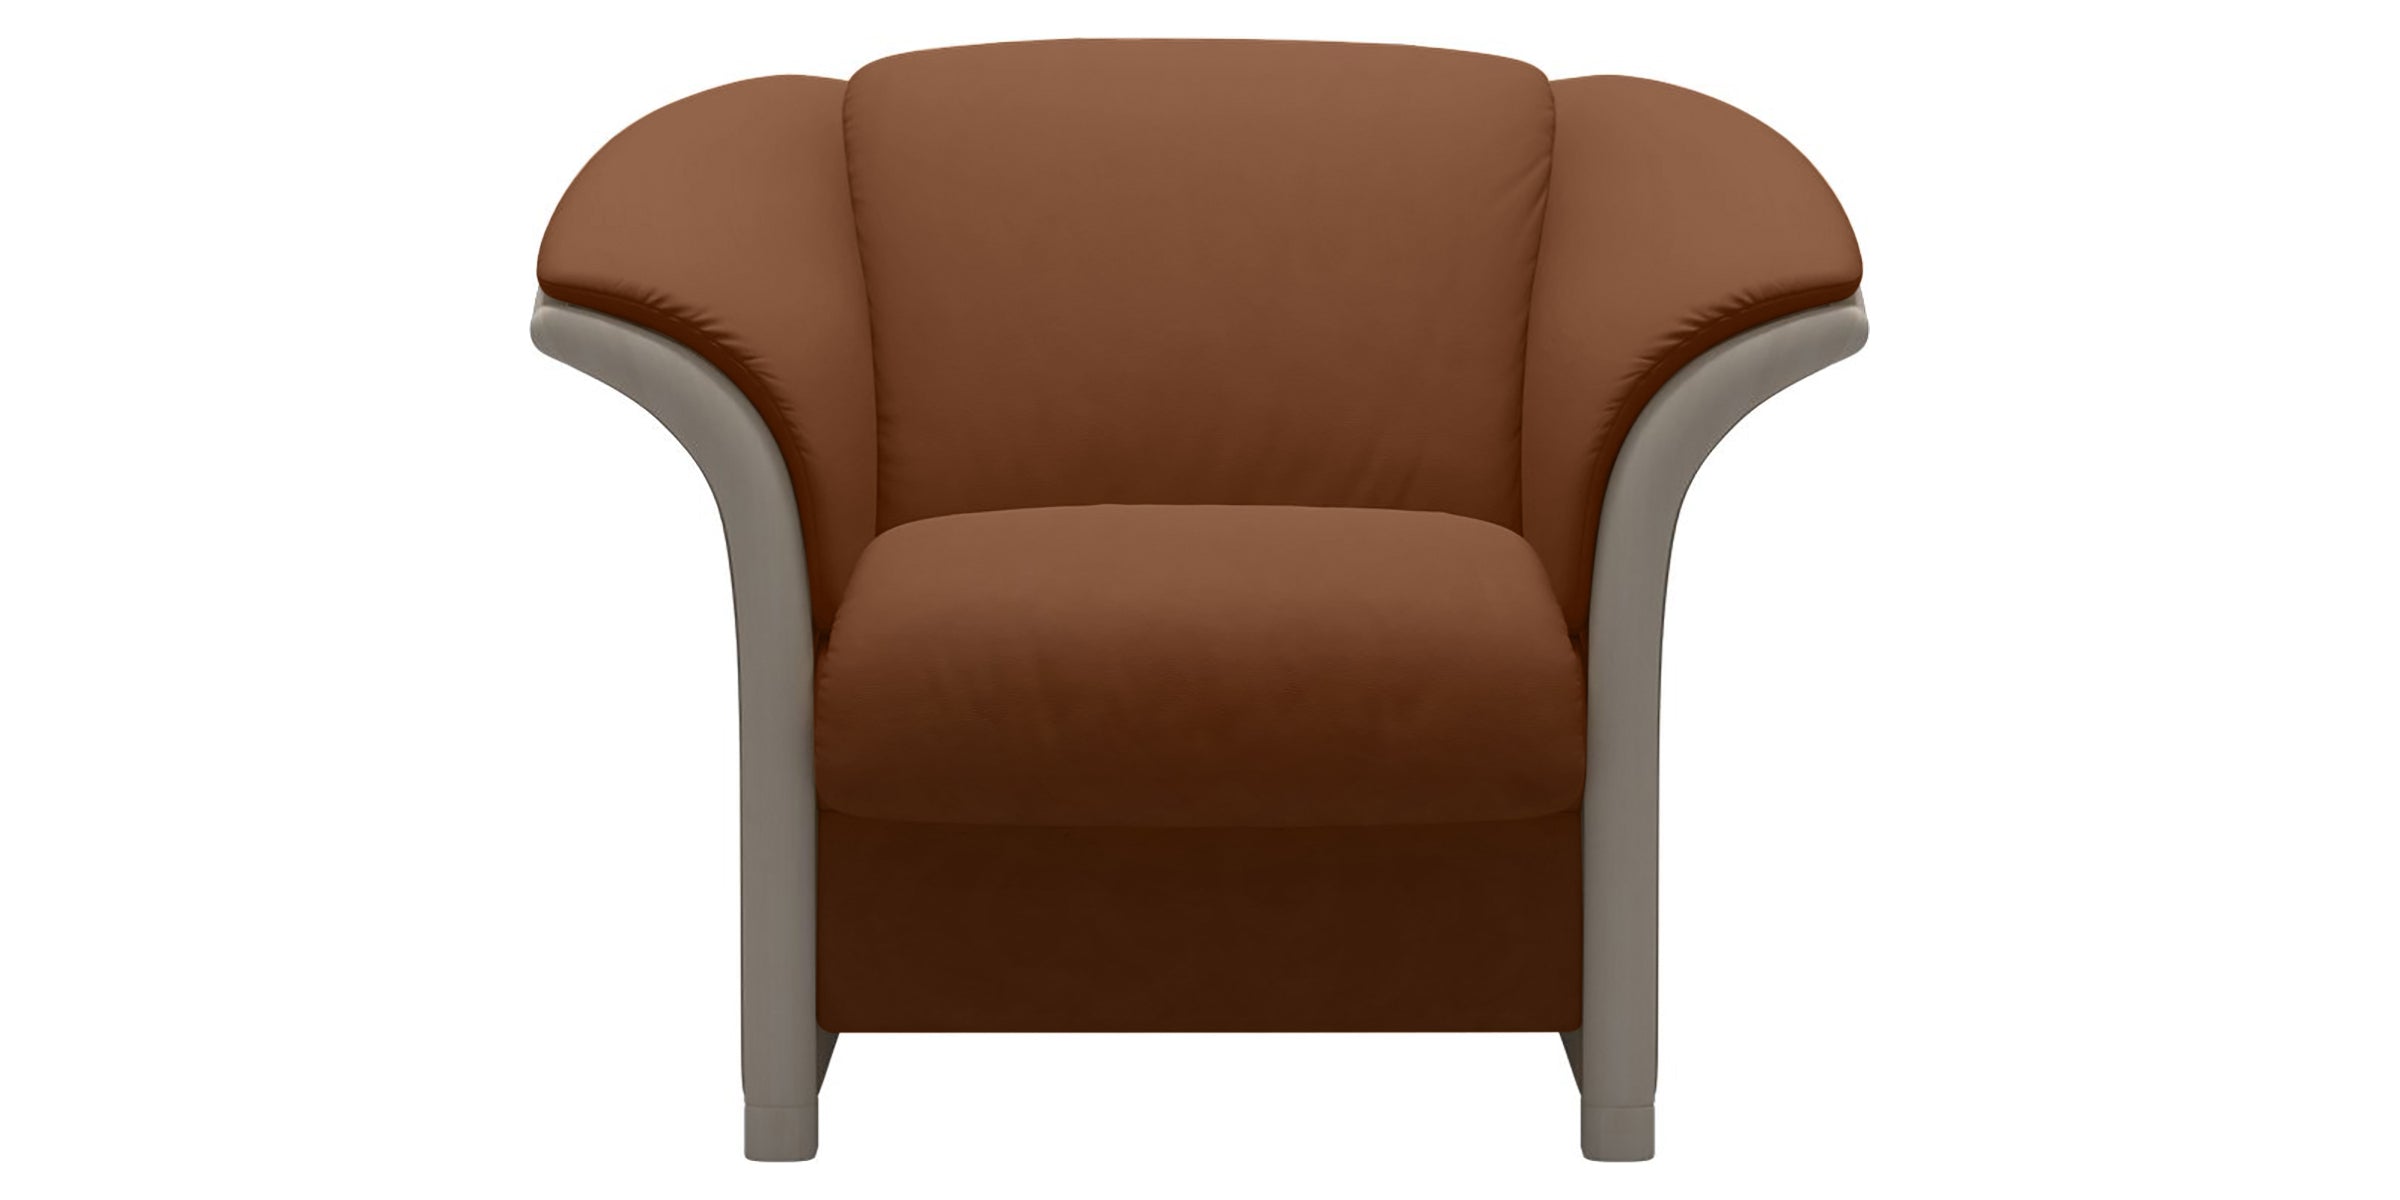 Paloma Leather New Cognac and Whitewash Arm Trim | Stressless Manhattan Chair | Valley Ridge Furniture